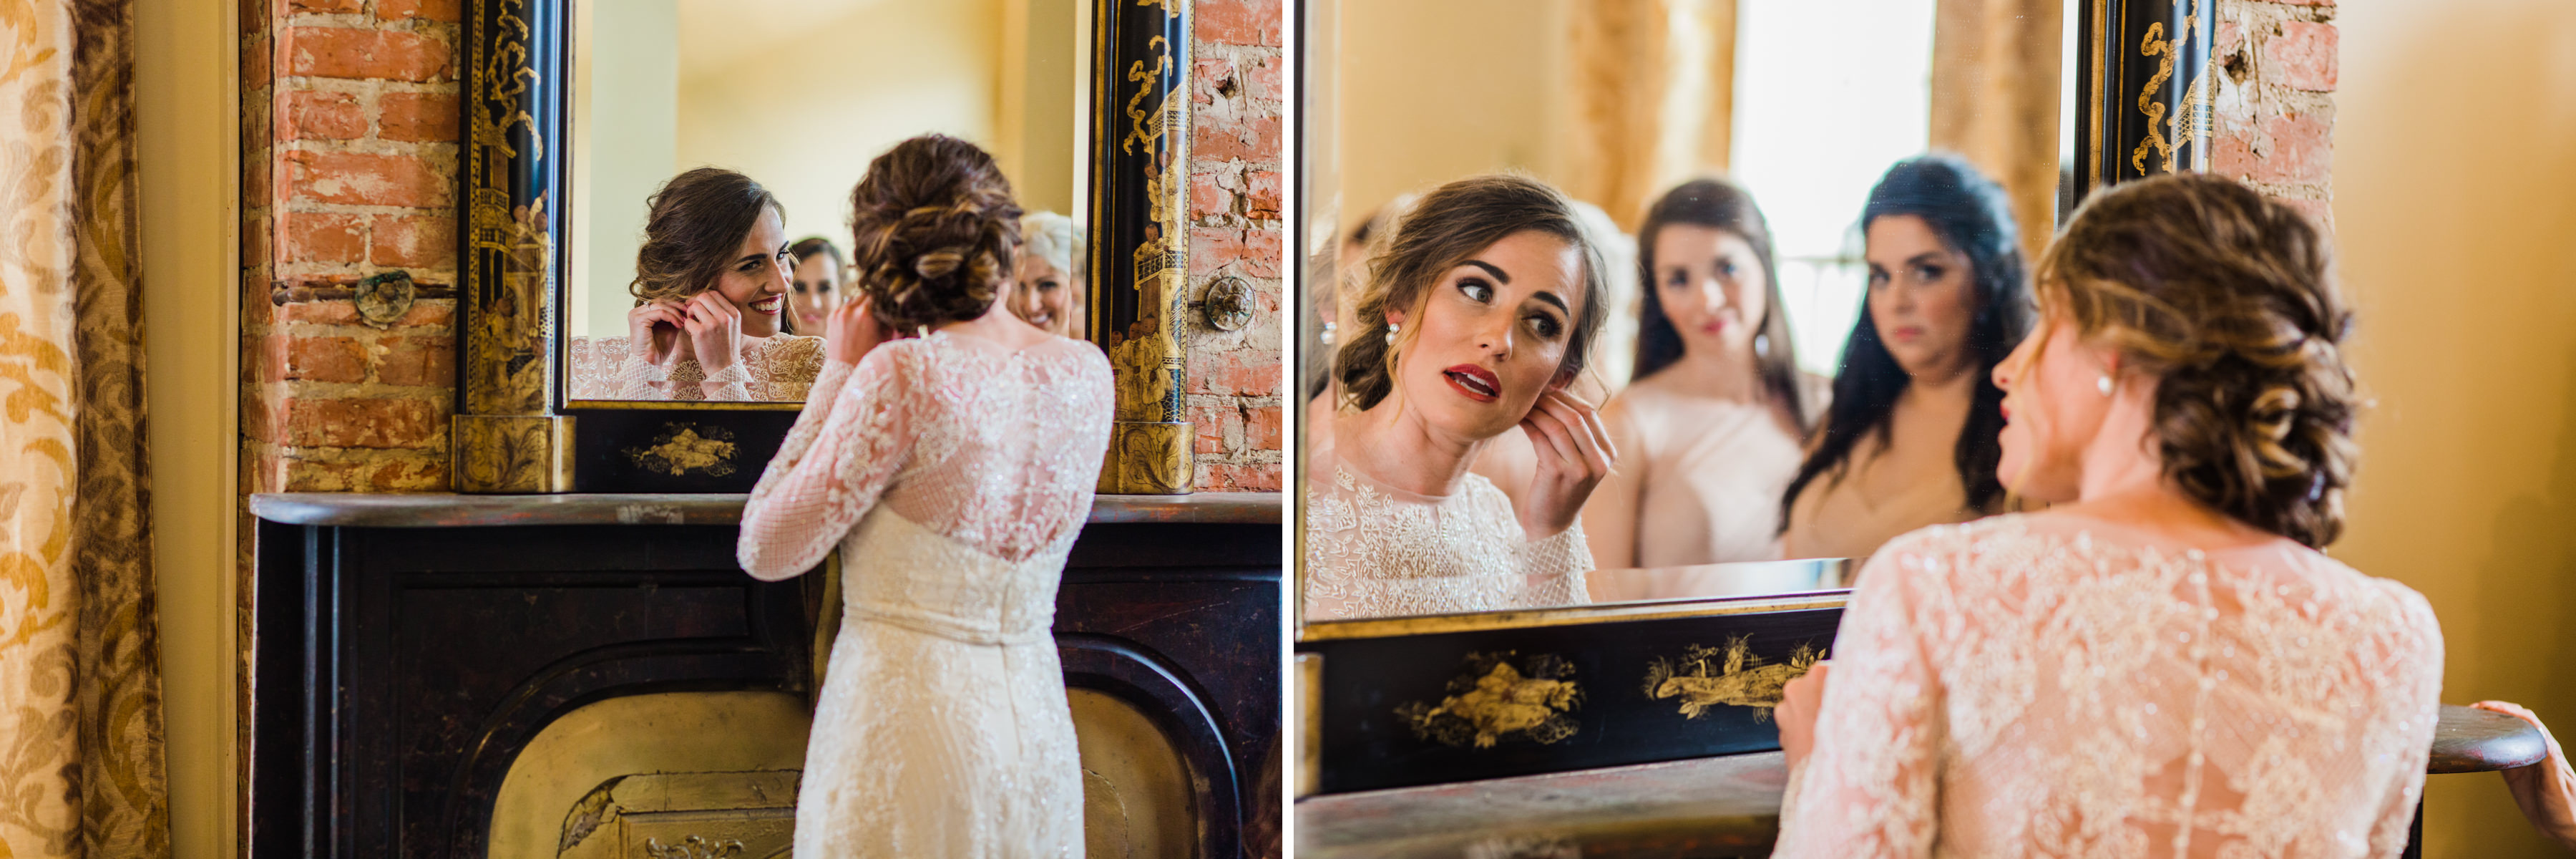 MULLET_WEDDING_NEW_ORLEANS_LOUISIANA_WEDDING_PHOTOGRAPHY_32